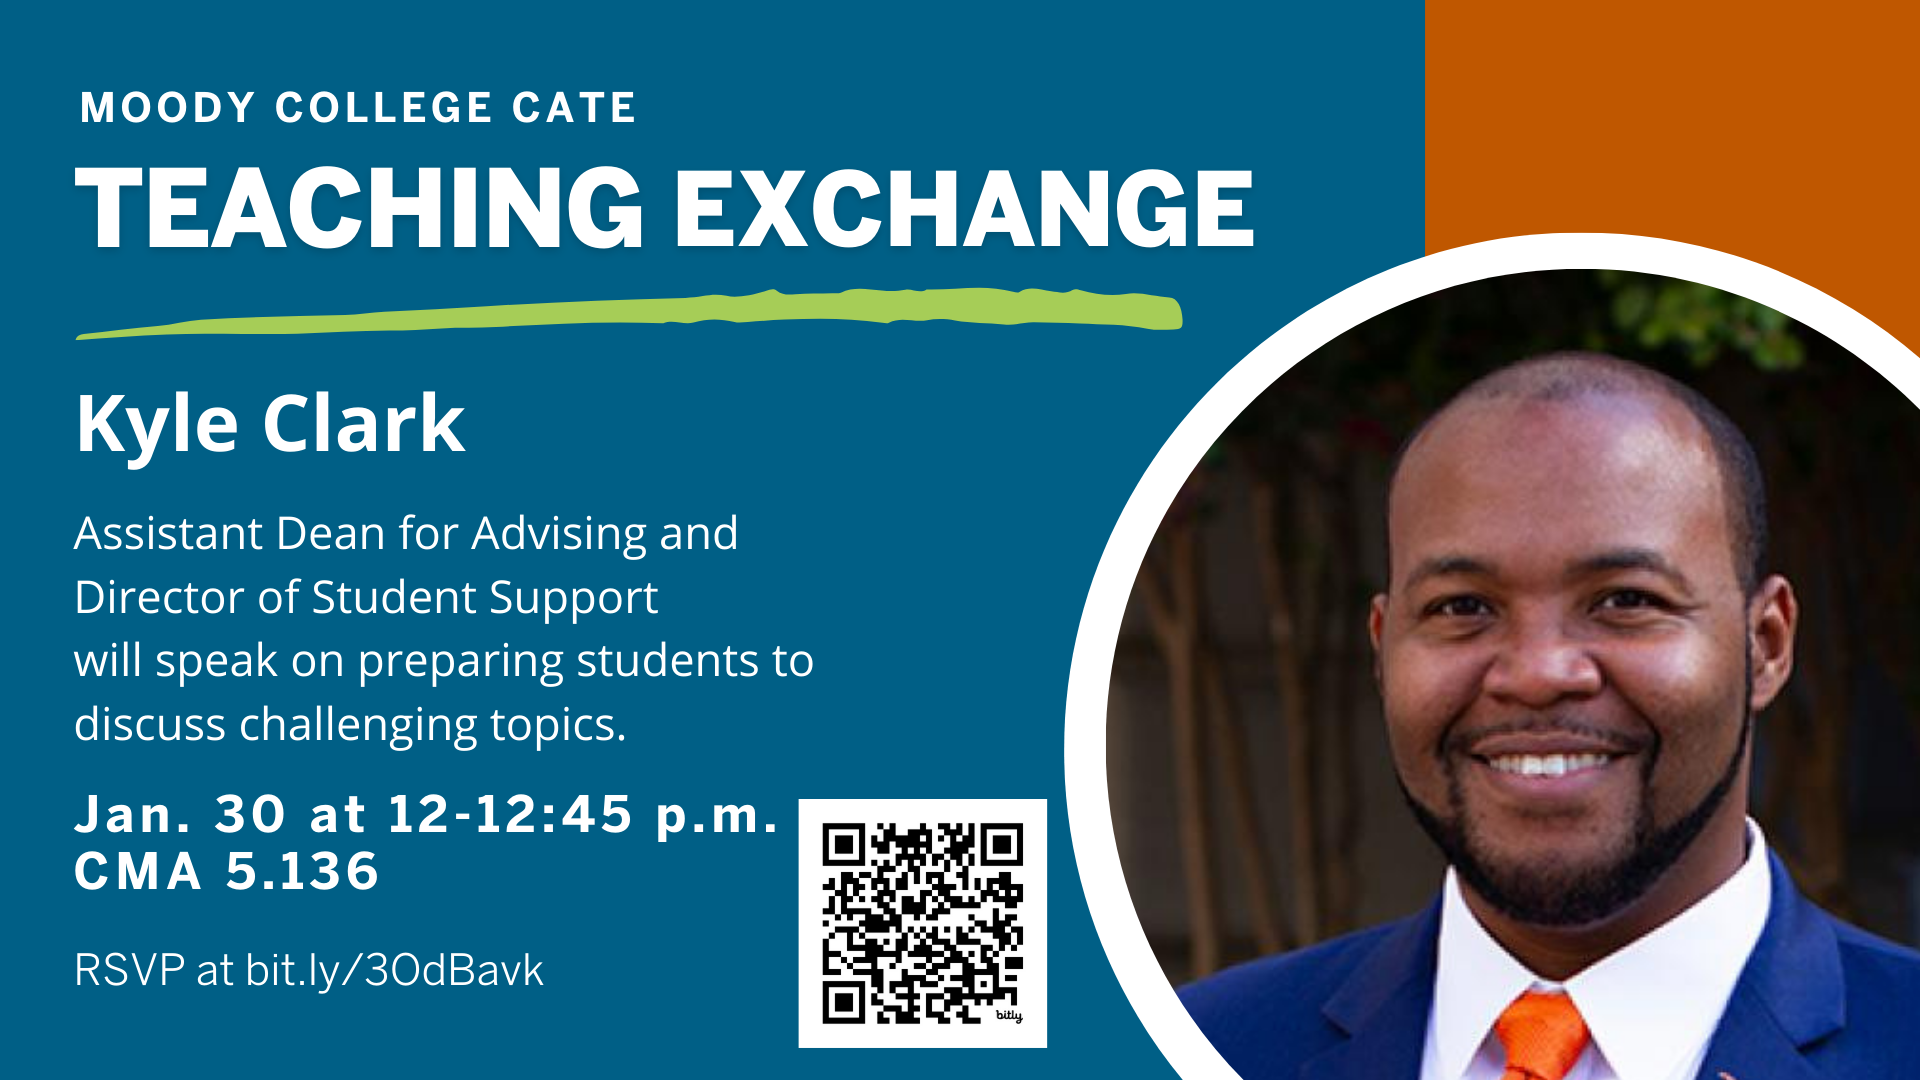 CATE Teaching Exchange - Kyle Clark. Jan. 30 at 12-12:45 p.m. in CMA 5.136.